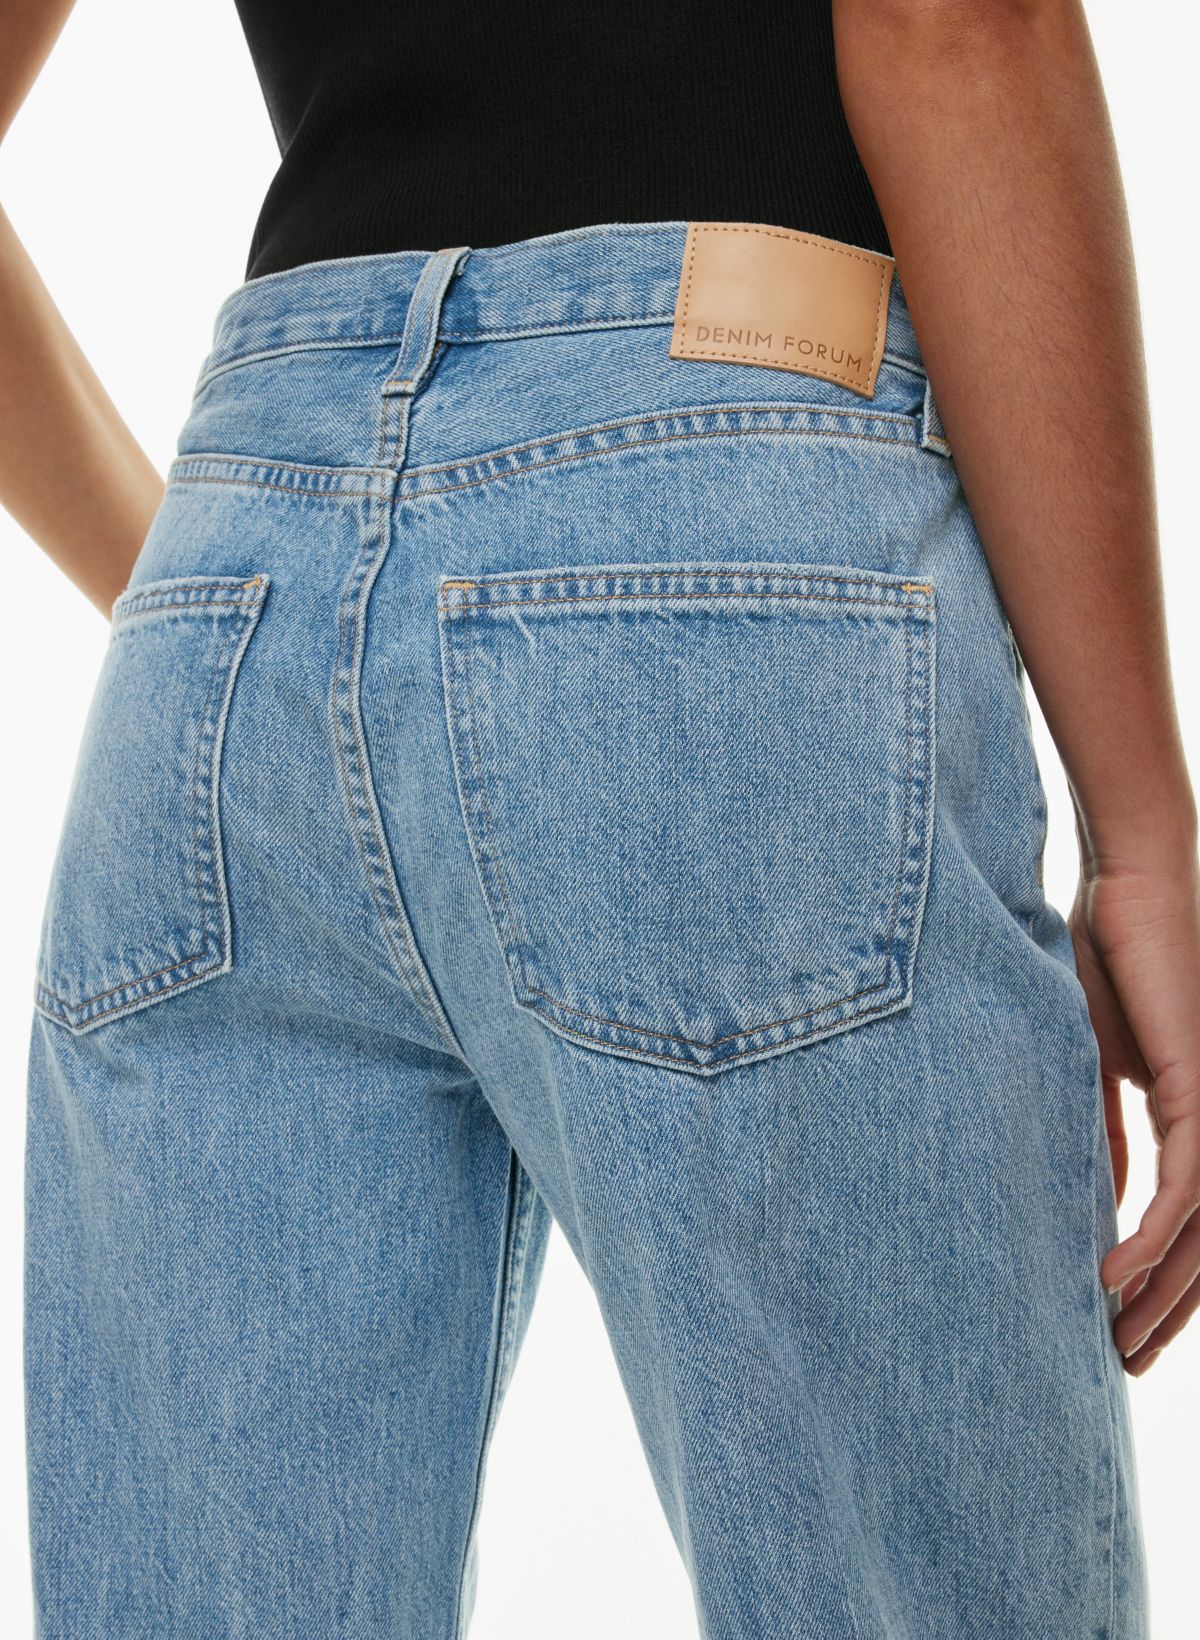 Pull&Bear seamless stretch denim flare jeans in indigo blue - part